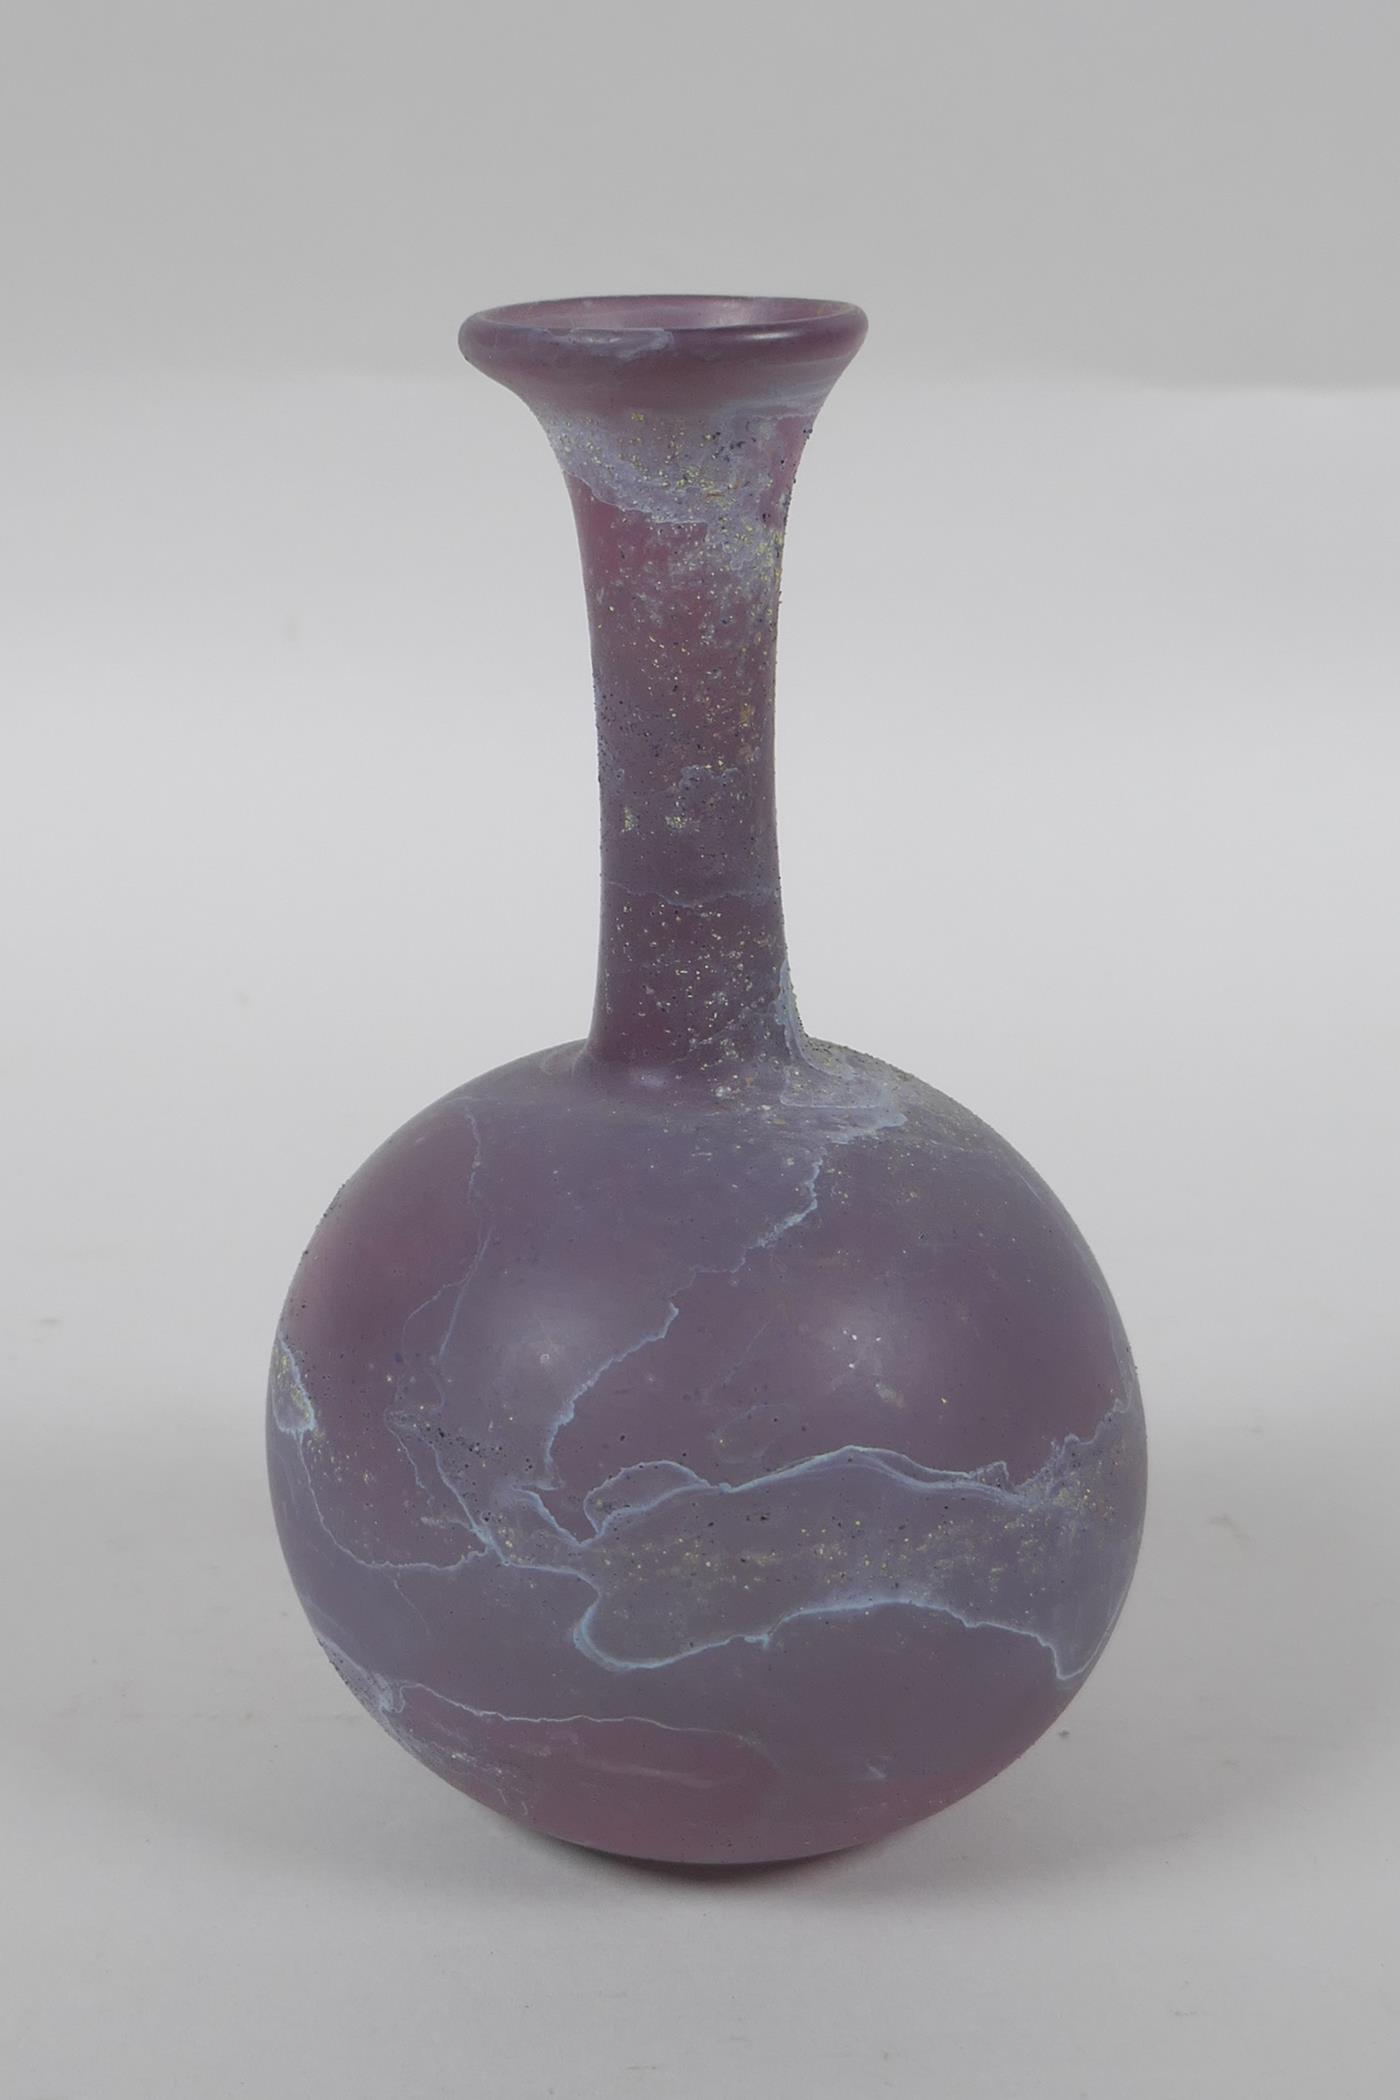 An antique purple glass bottle, 14cm high - Image 4 of 4